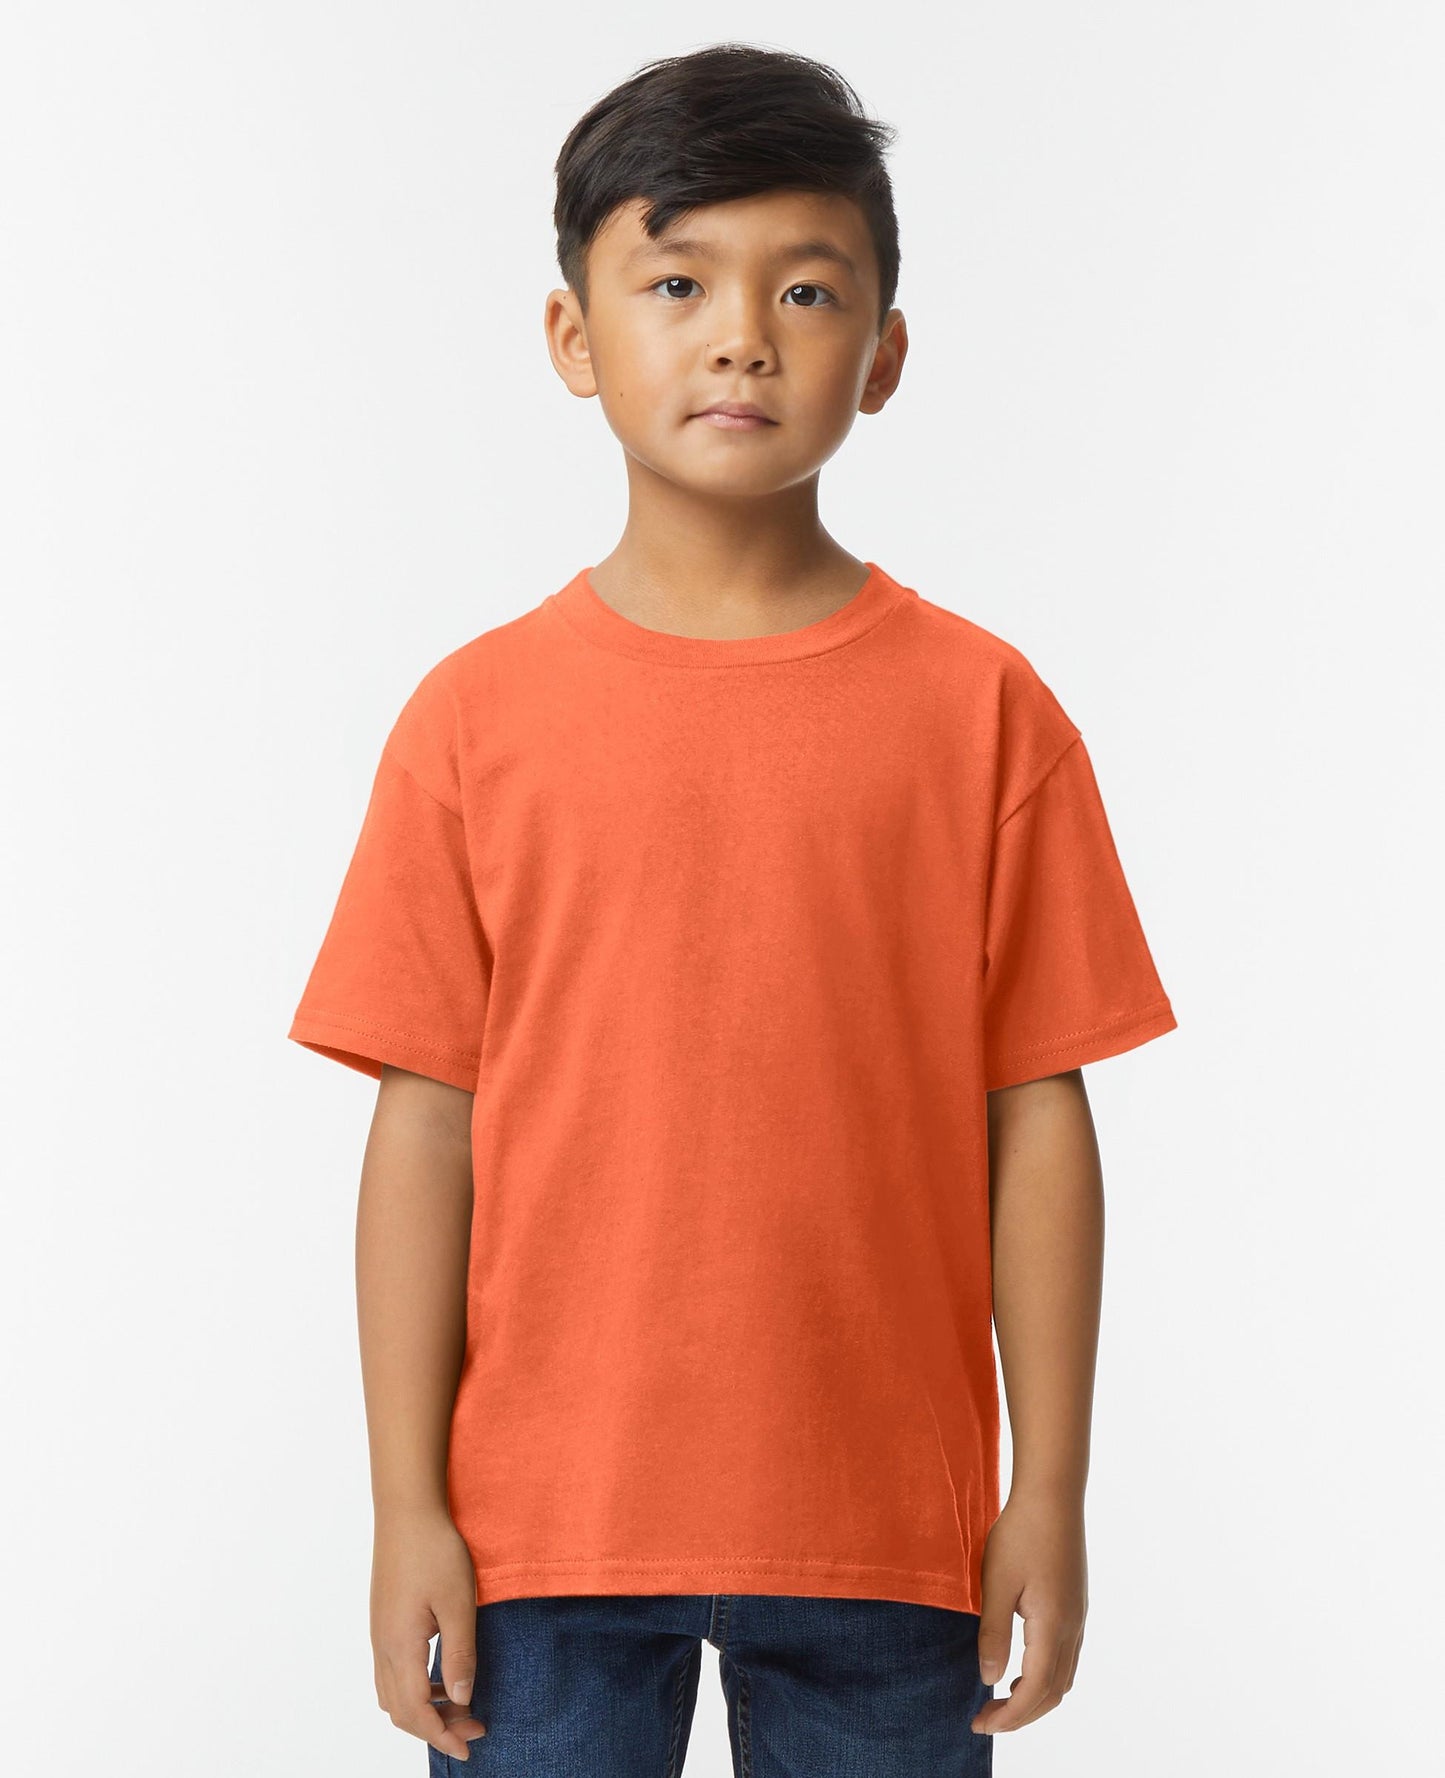 Gildan Softstyle Midweight Kids T - Orange